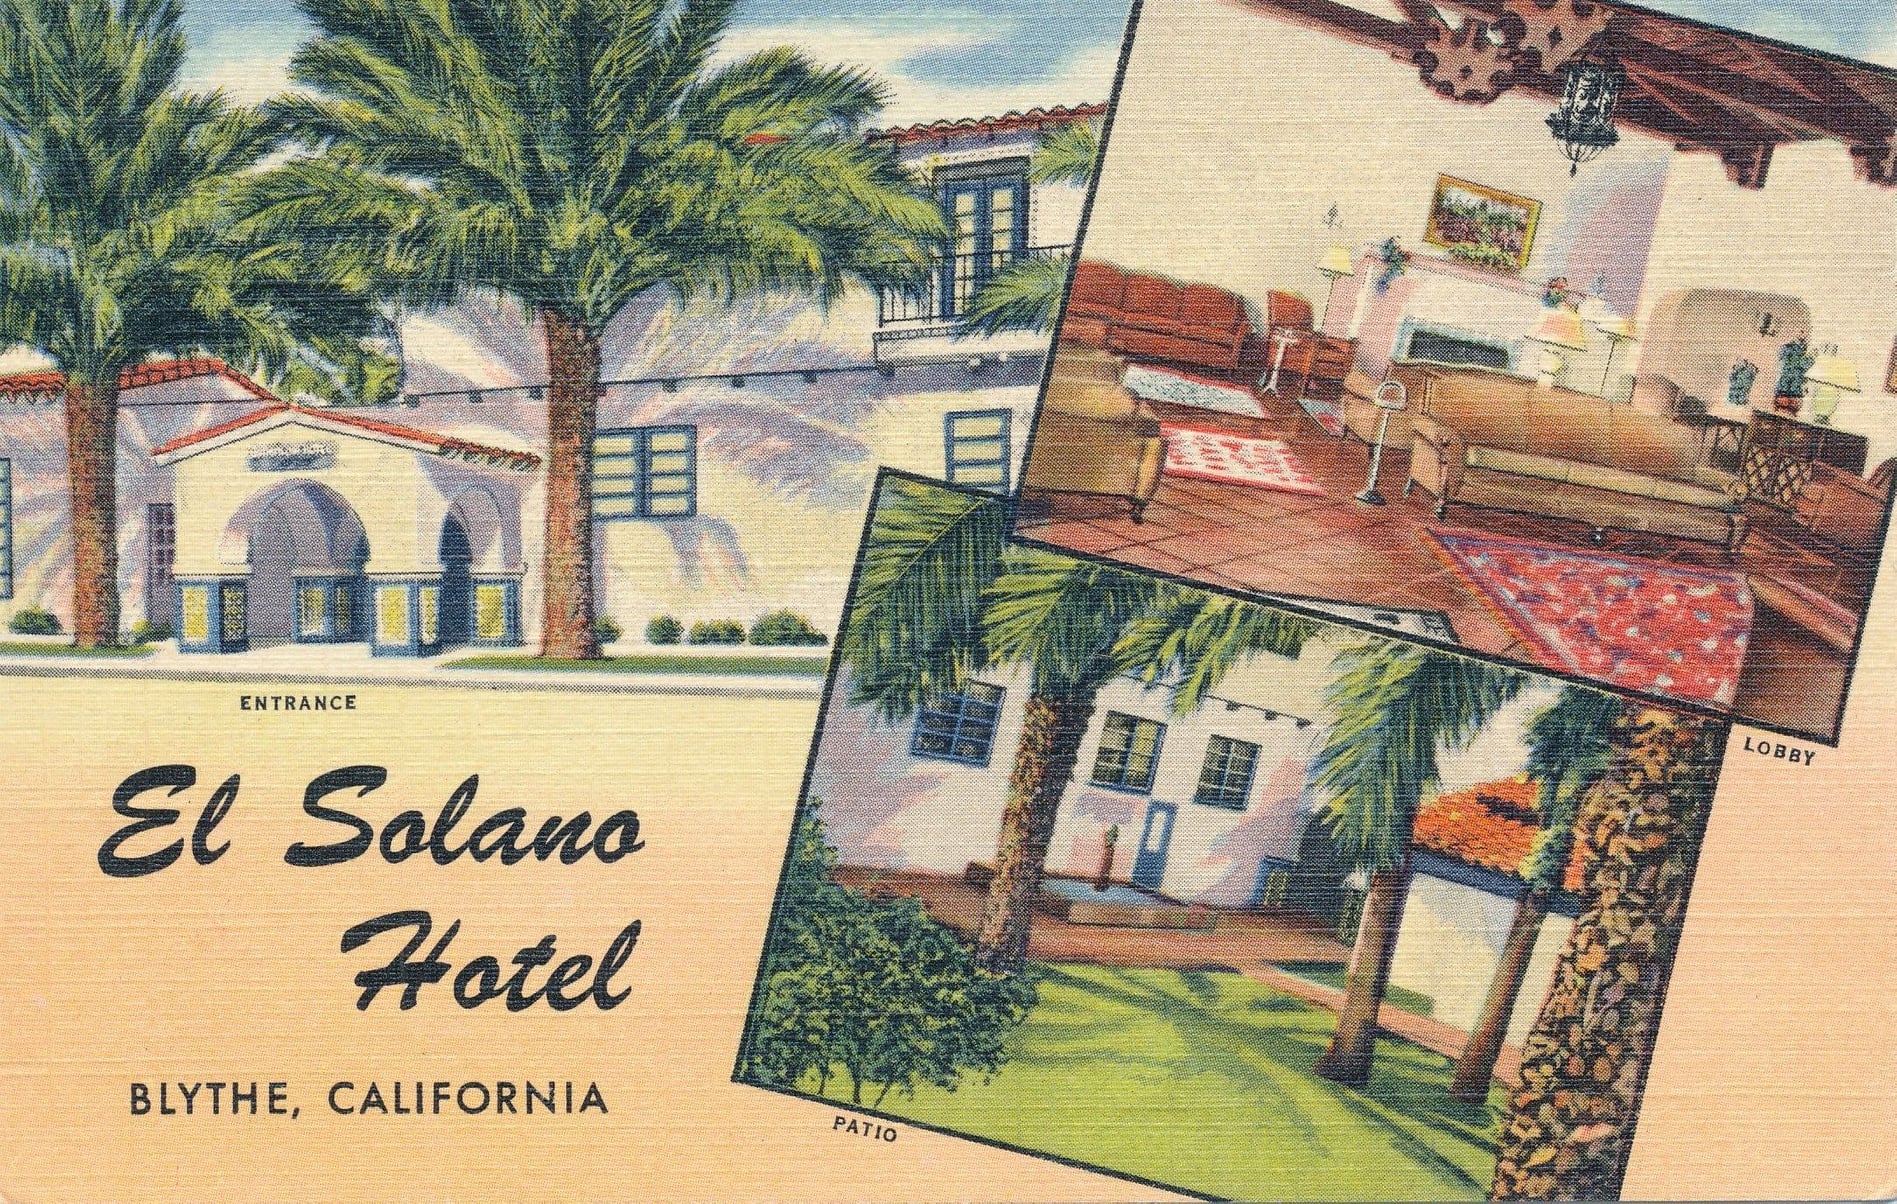 DR. PATRICK’S POSTCARD ROADSIDE: El Solano Hotel